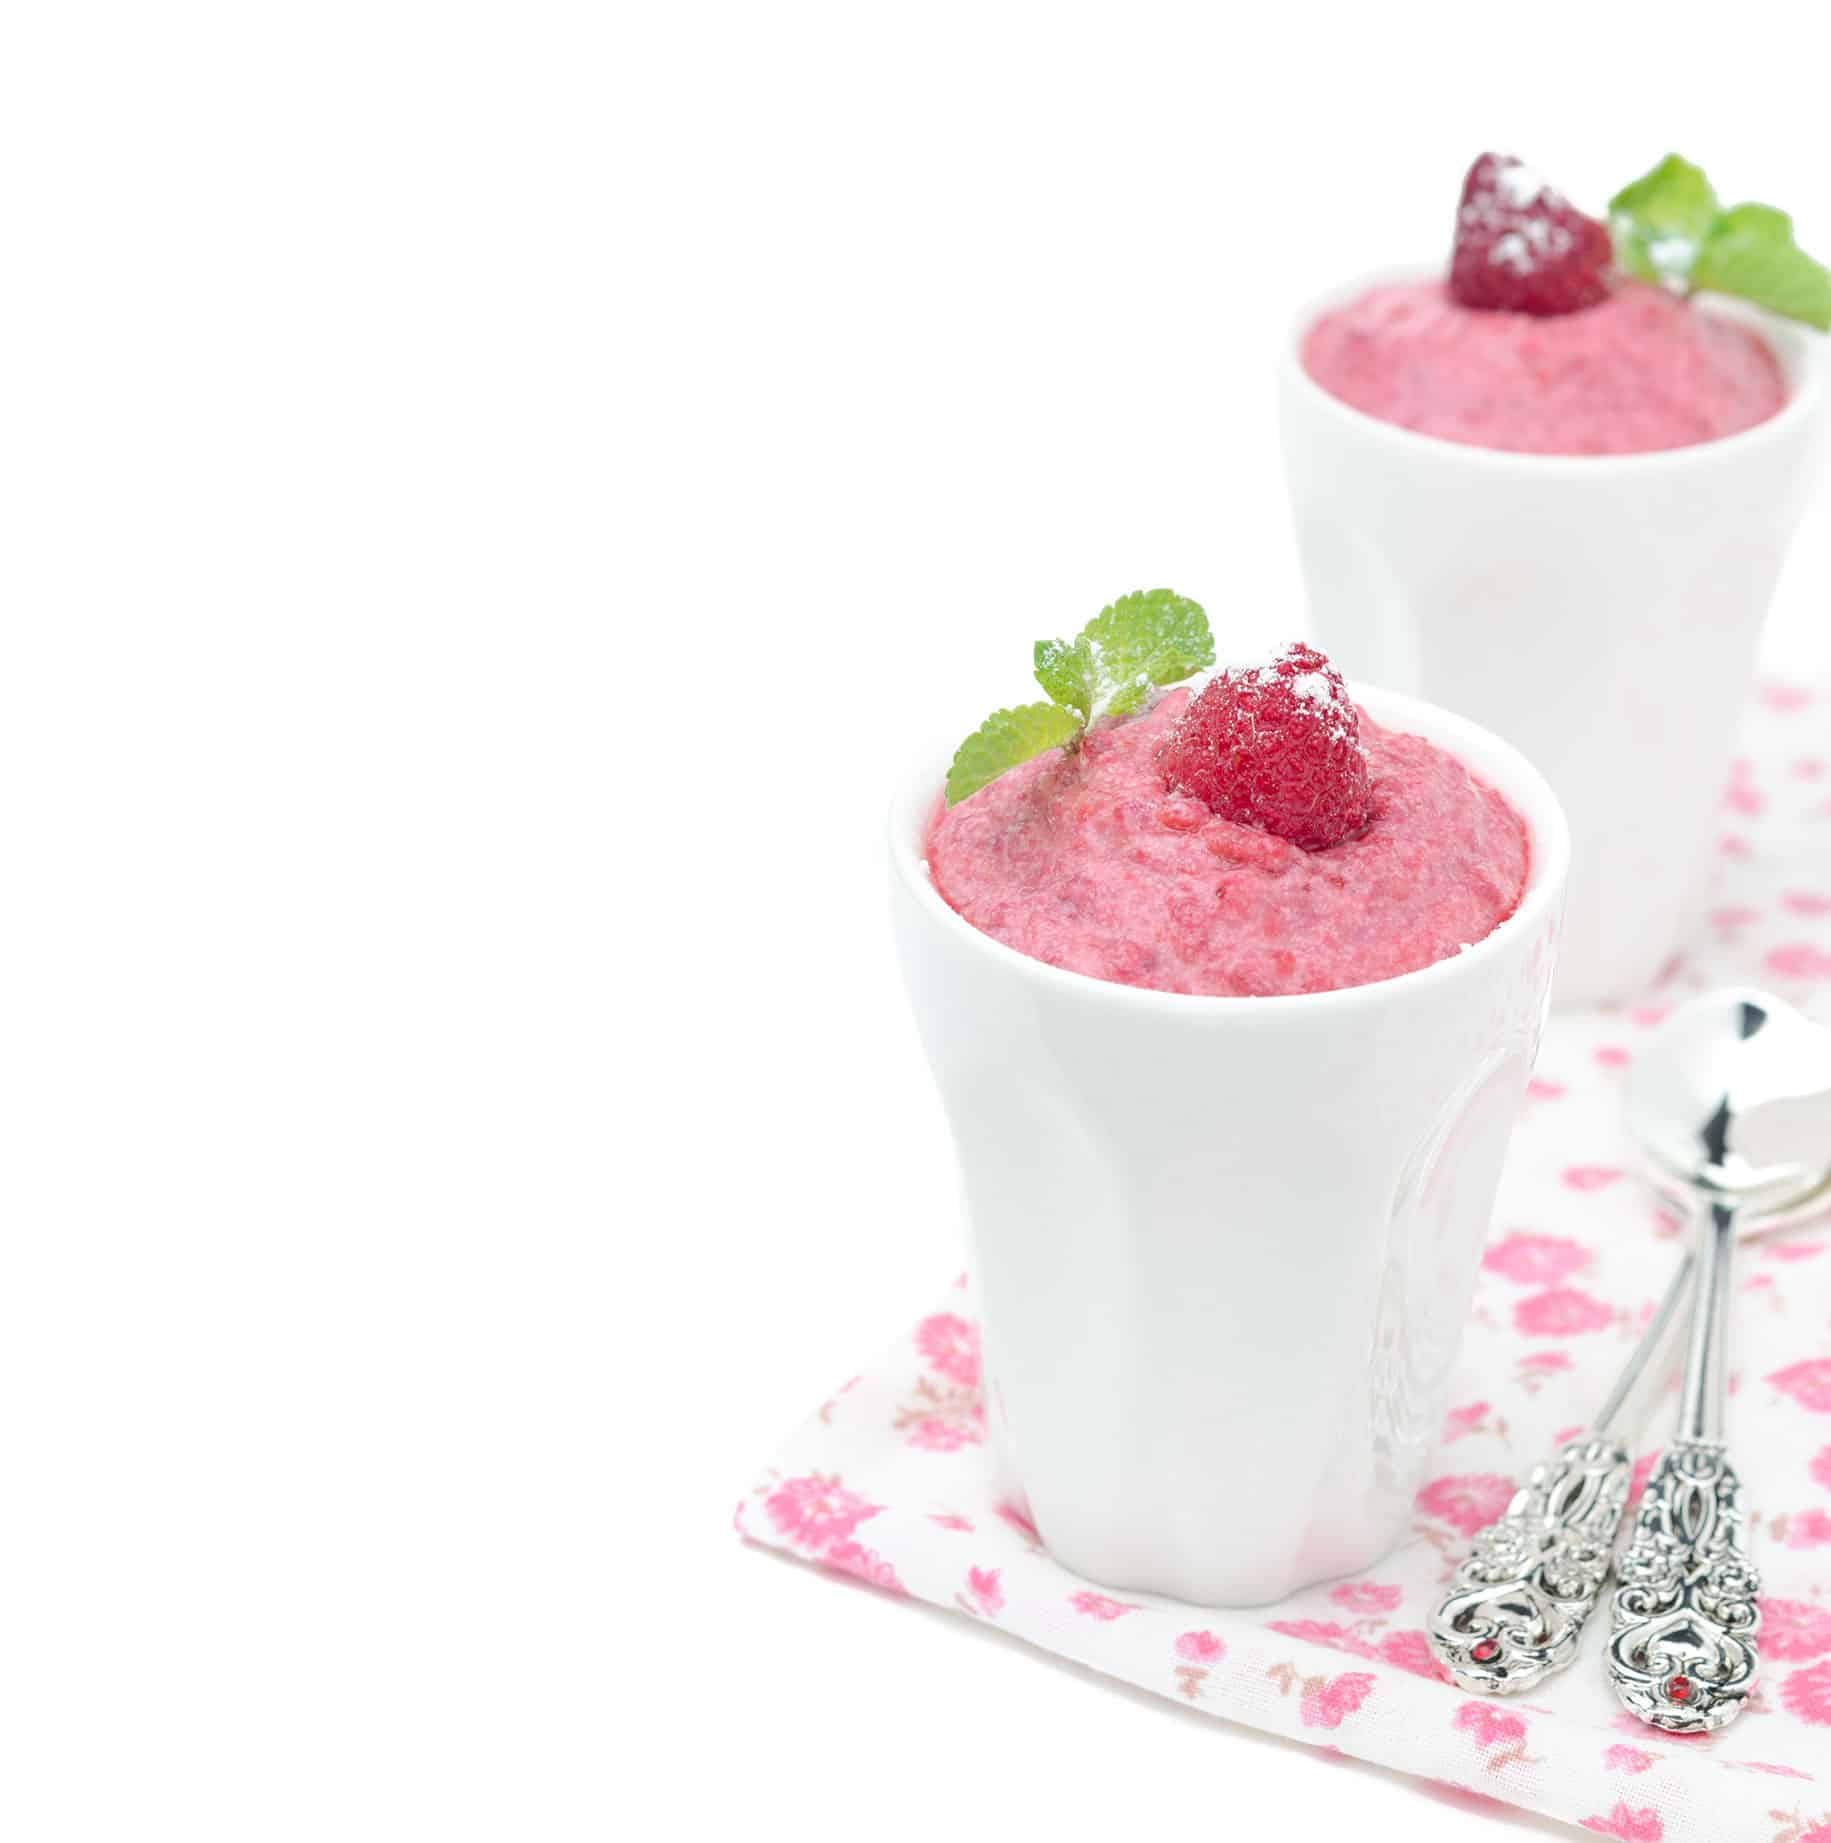 Ravishing Raspberry Bavarois with Raspberry Sauce